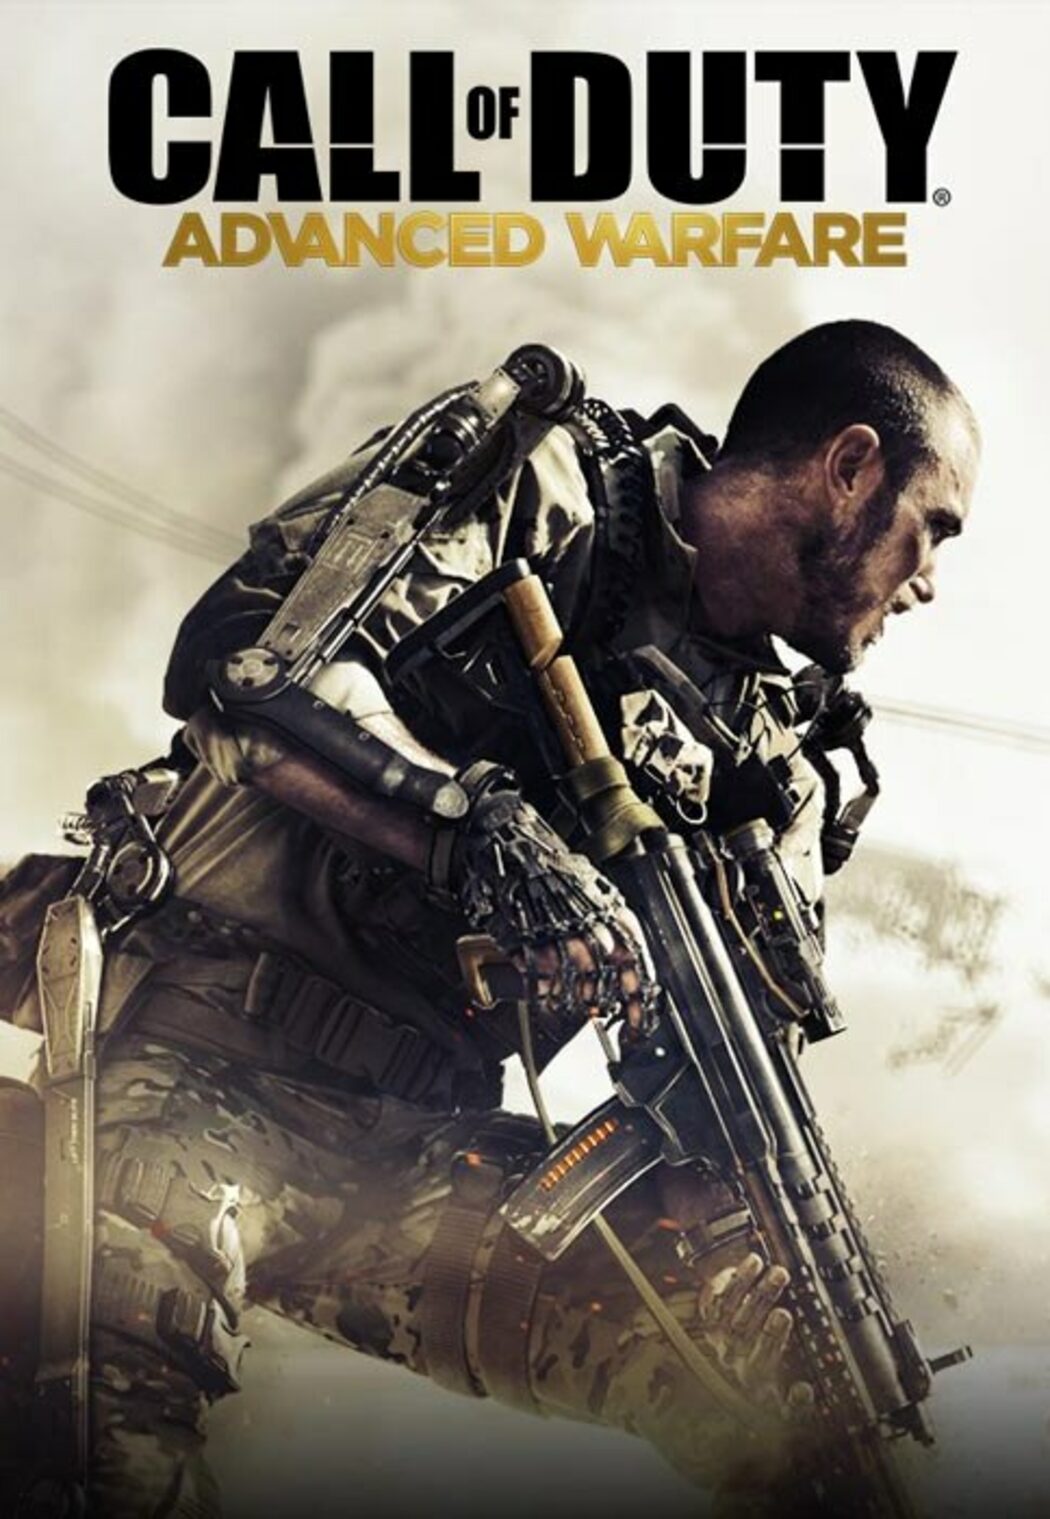 Call of Duty Advanced Warfare Digital Pro Edition (PC) Key cheap - Price of  $88.08 for Steam